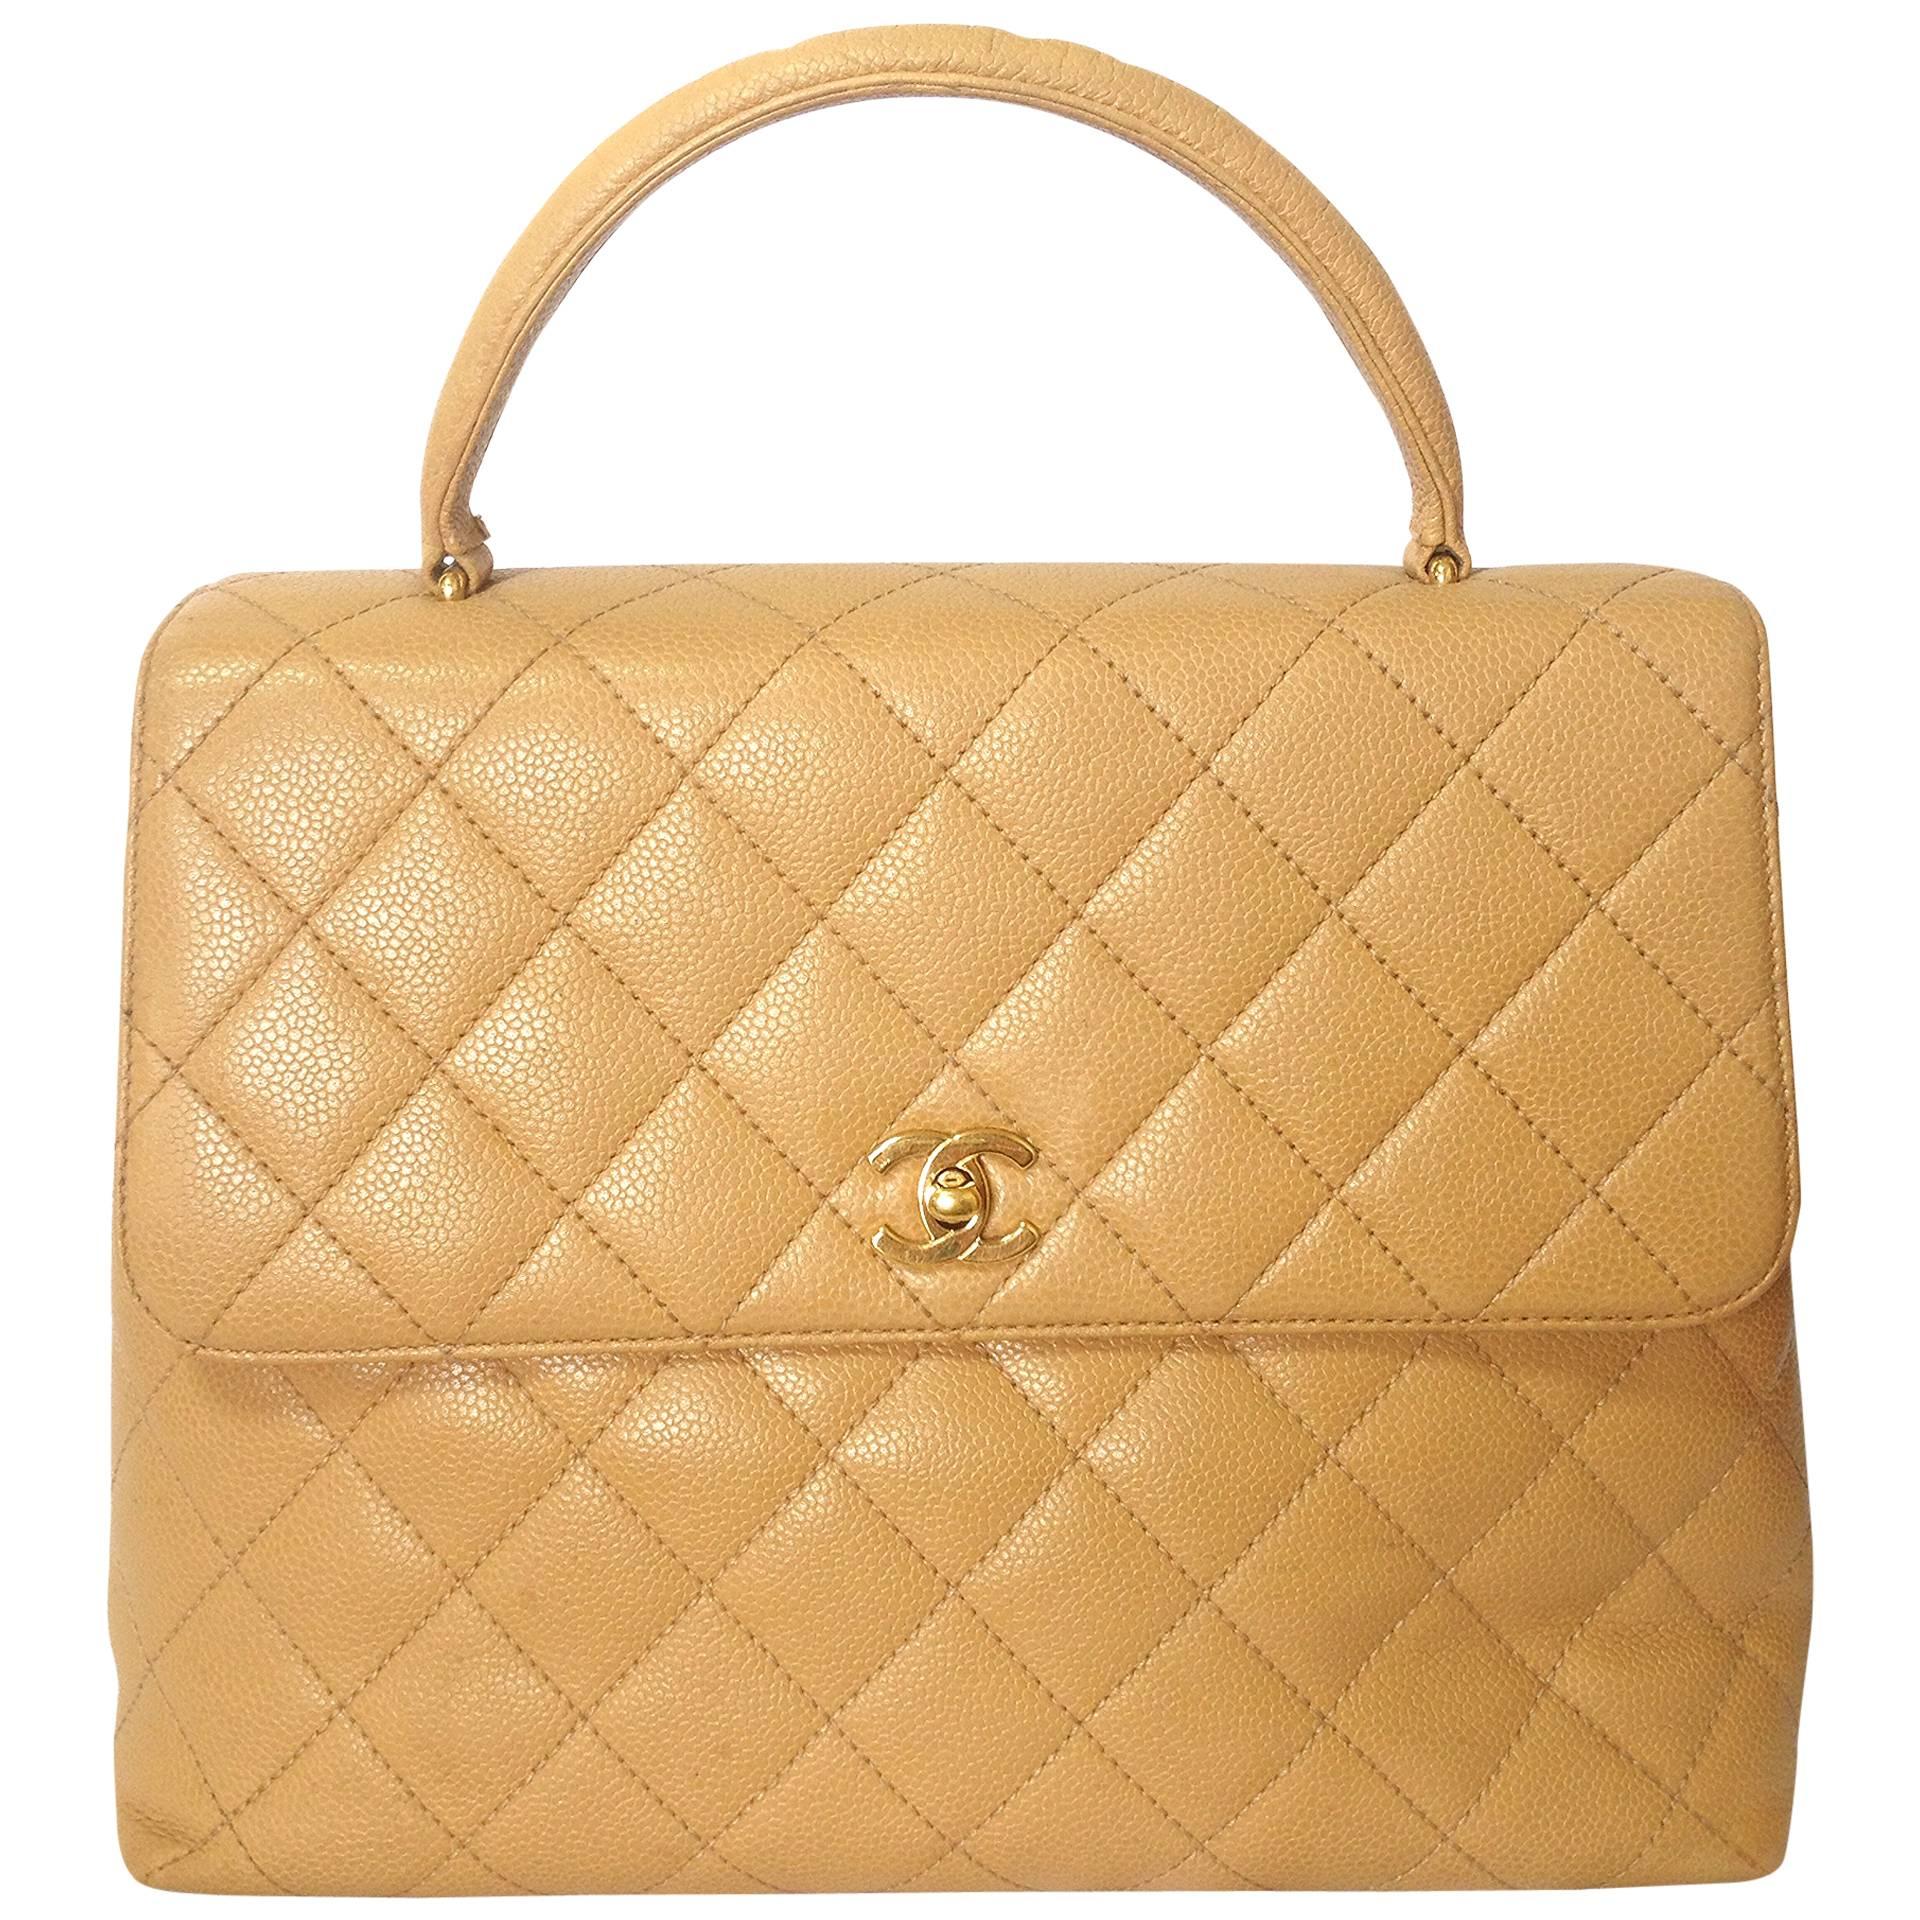 Vintage CHANEL beige brown caviar leather kelly handbag with golden CC closure. 